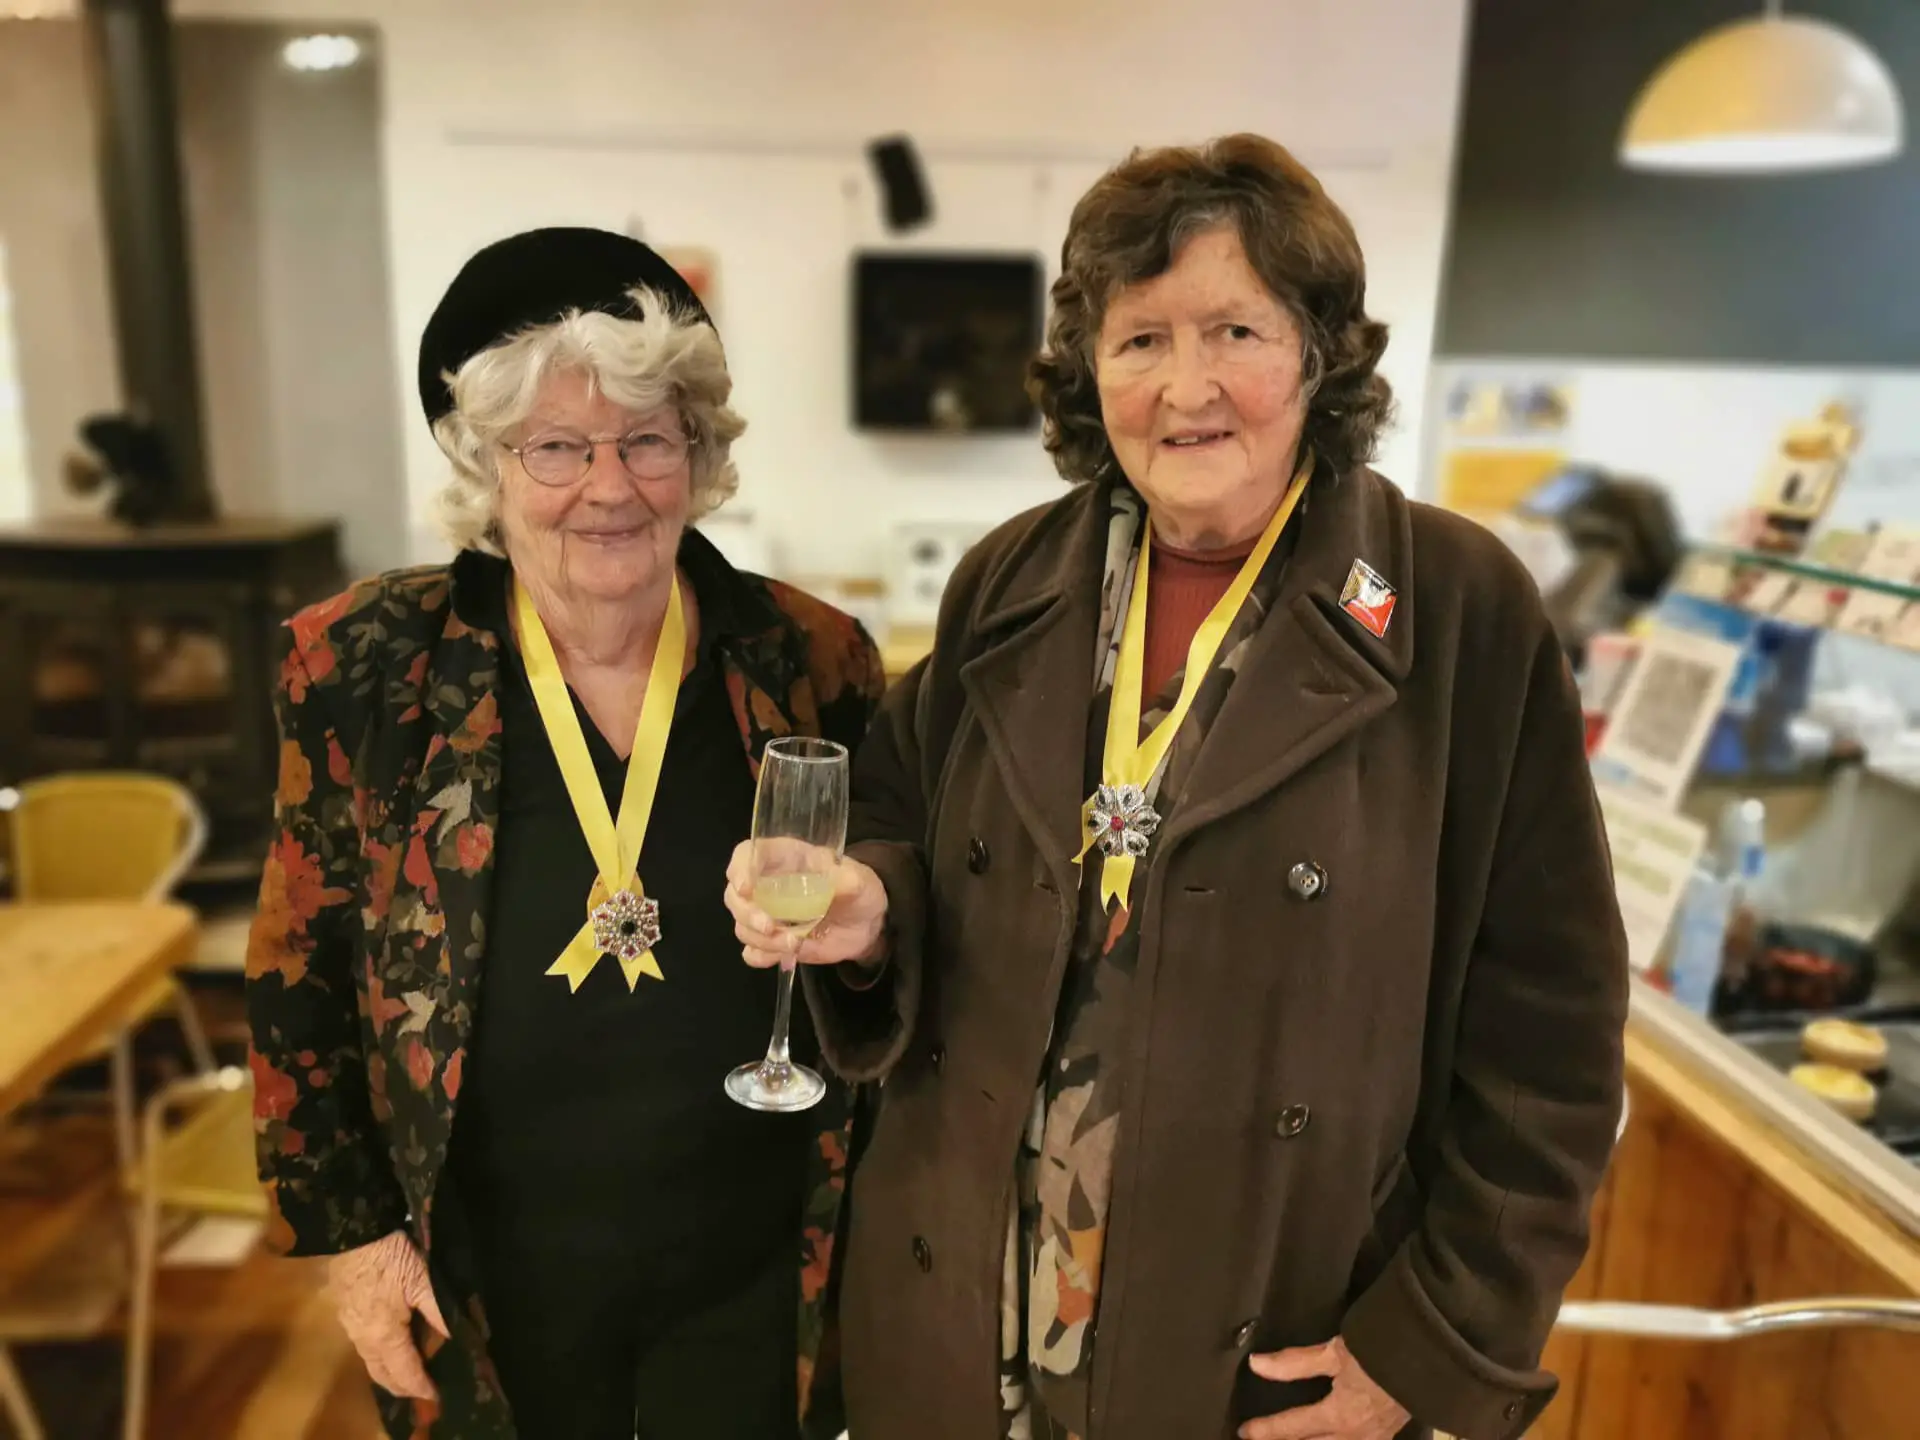 Monkton Medal winners at the Monkton Awards 2021